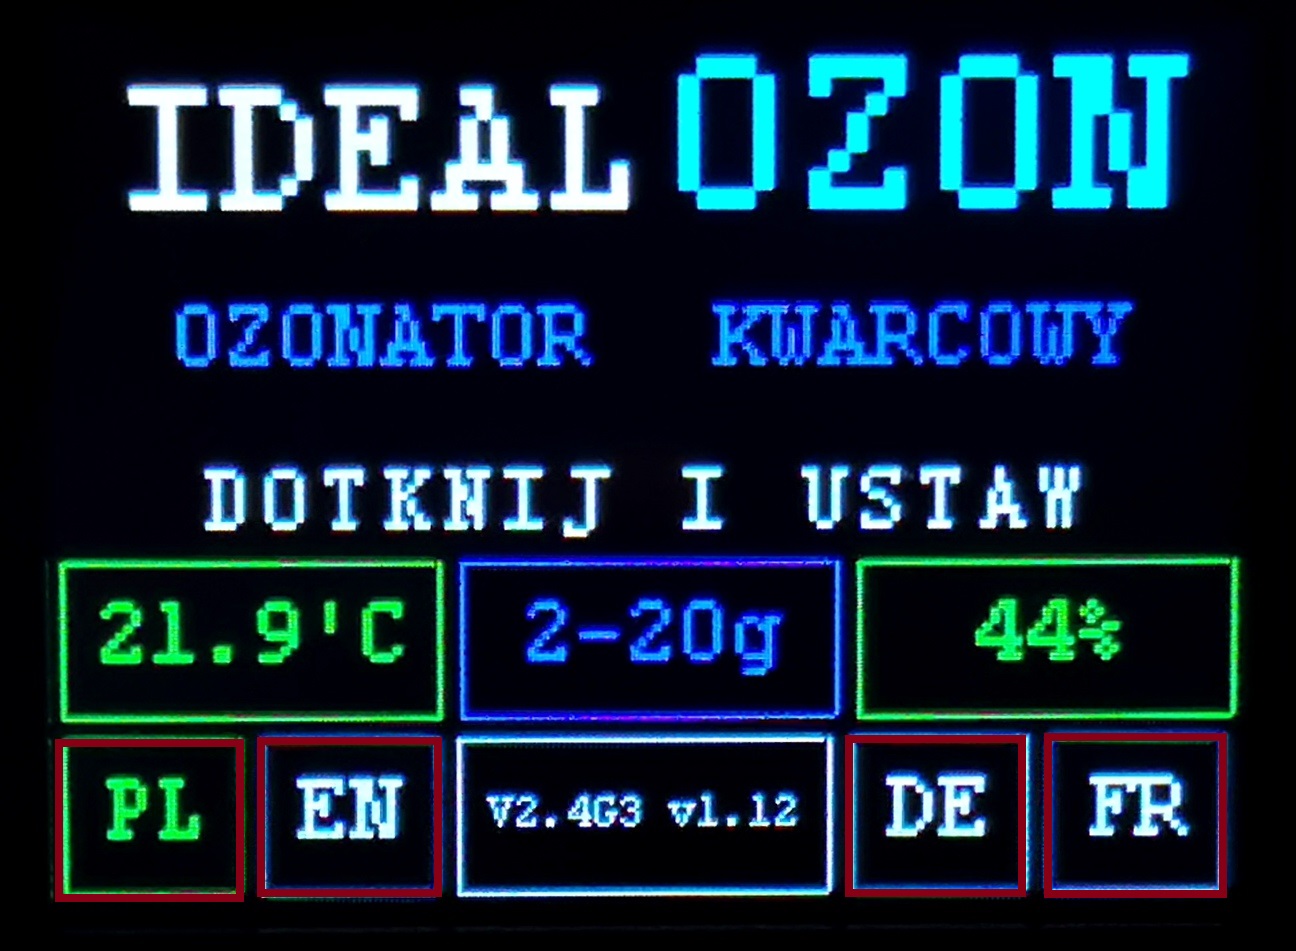 Parametry ozonatora kwarcowego V2.5